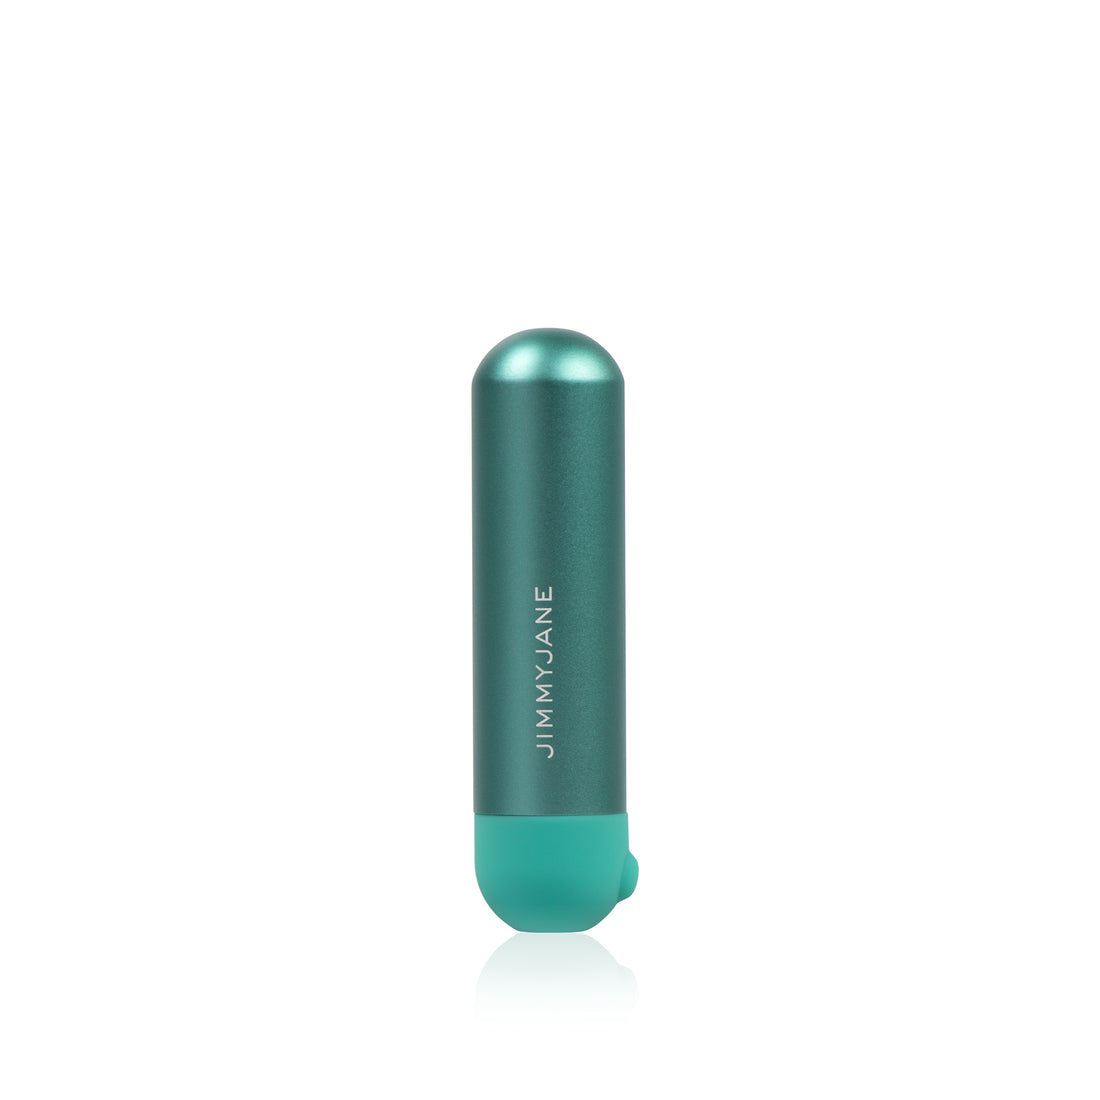 Mini bullet vibrator in the green color jimmyjaneminichromateal1#teal